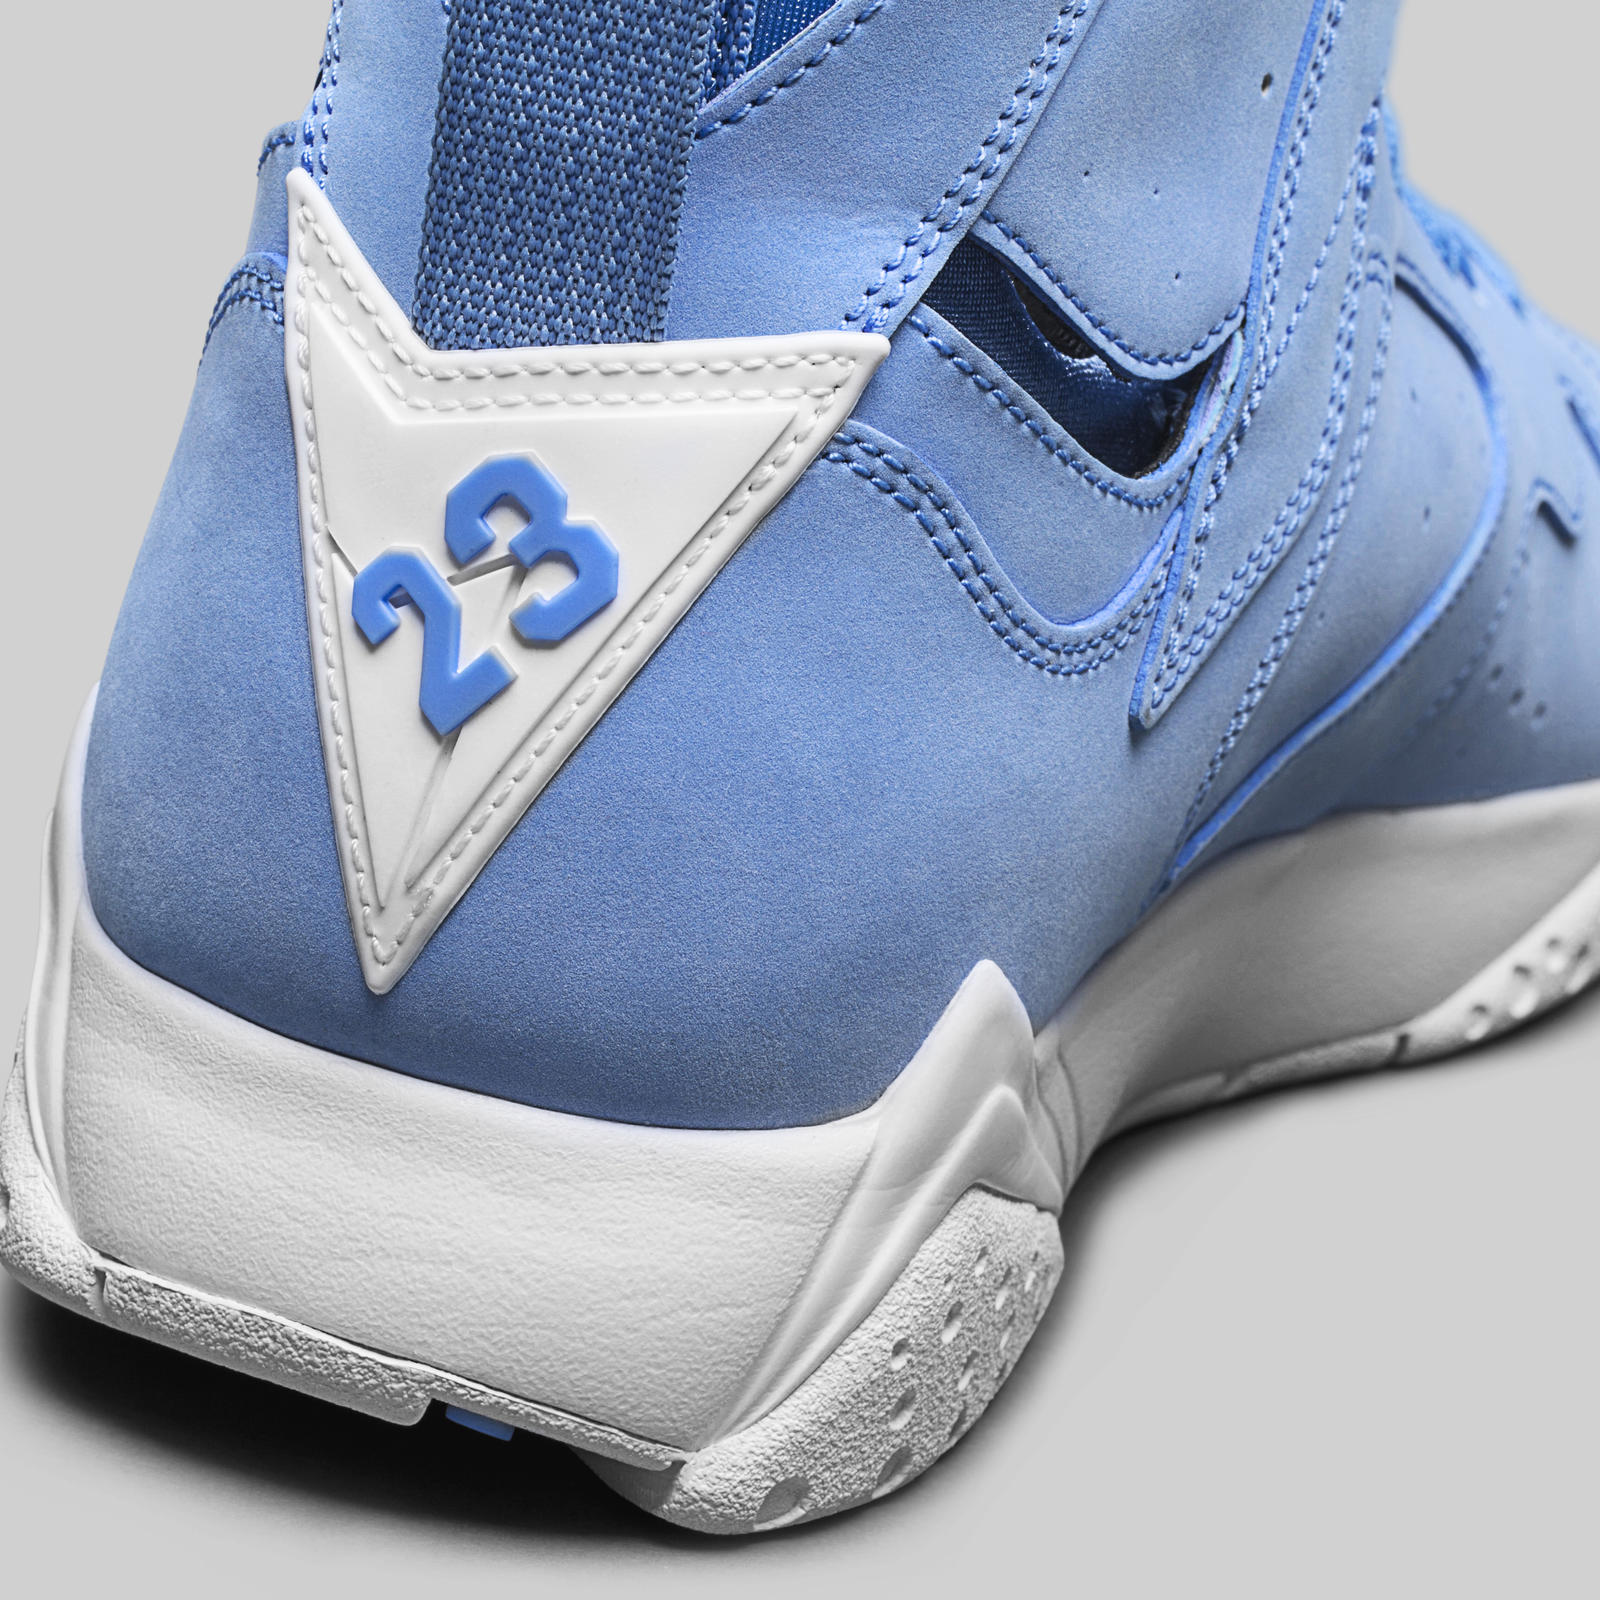 Jordan Brands Shows Upcoming Retro Jordans | Sneaker Shop Talk